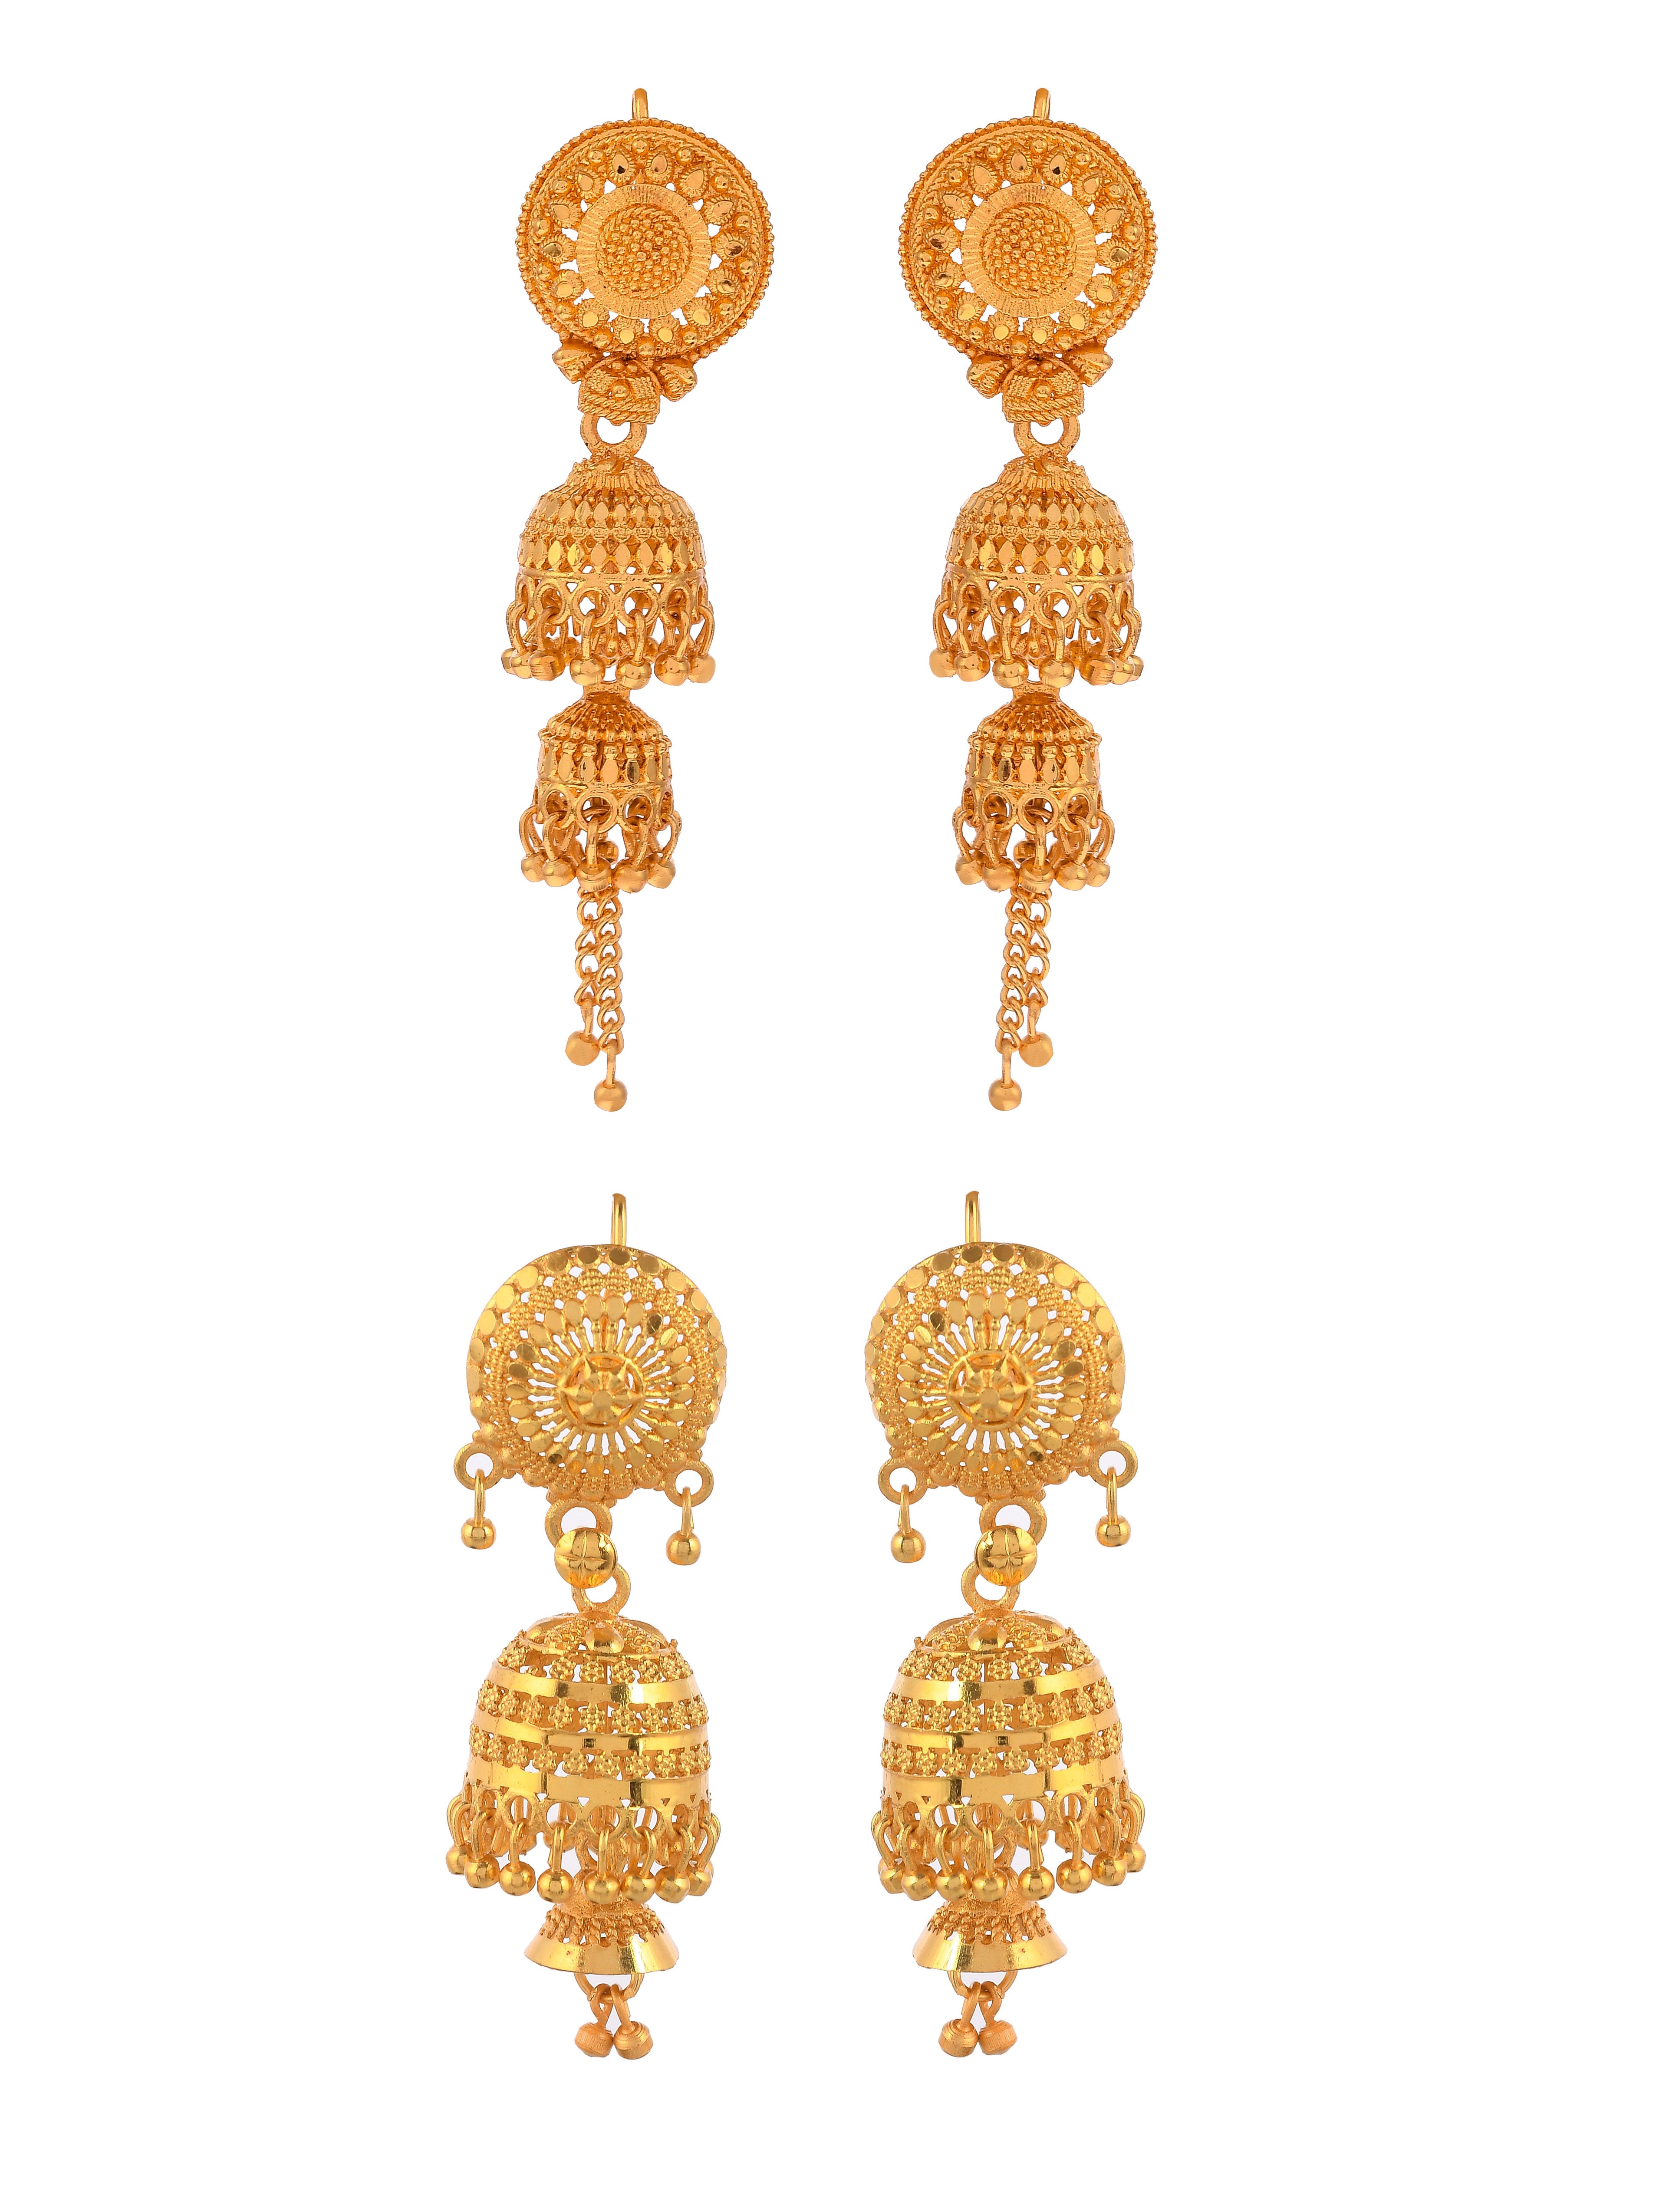 Orange and Fuschia Rhinestone Earrings in Silver Tone | Jewelry | Silver |  Gift, Indian, Handmade